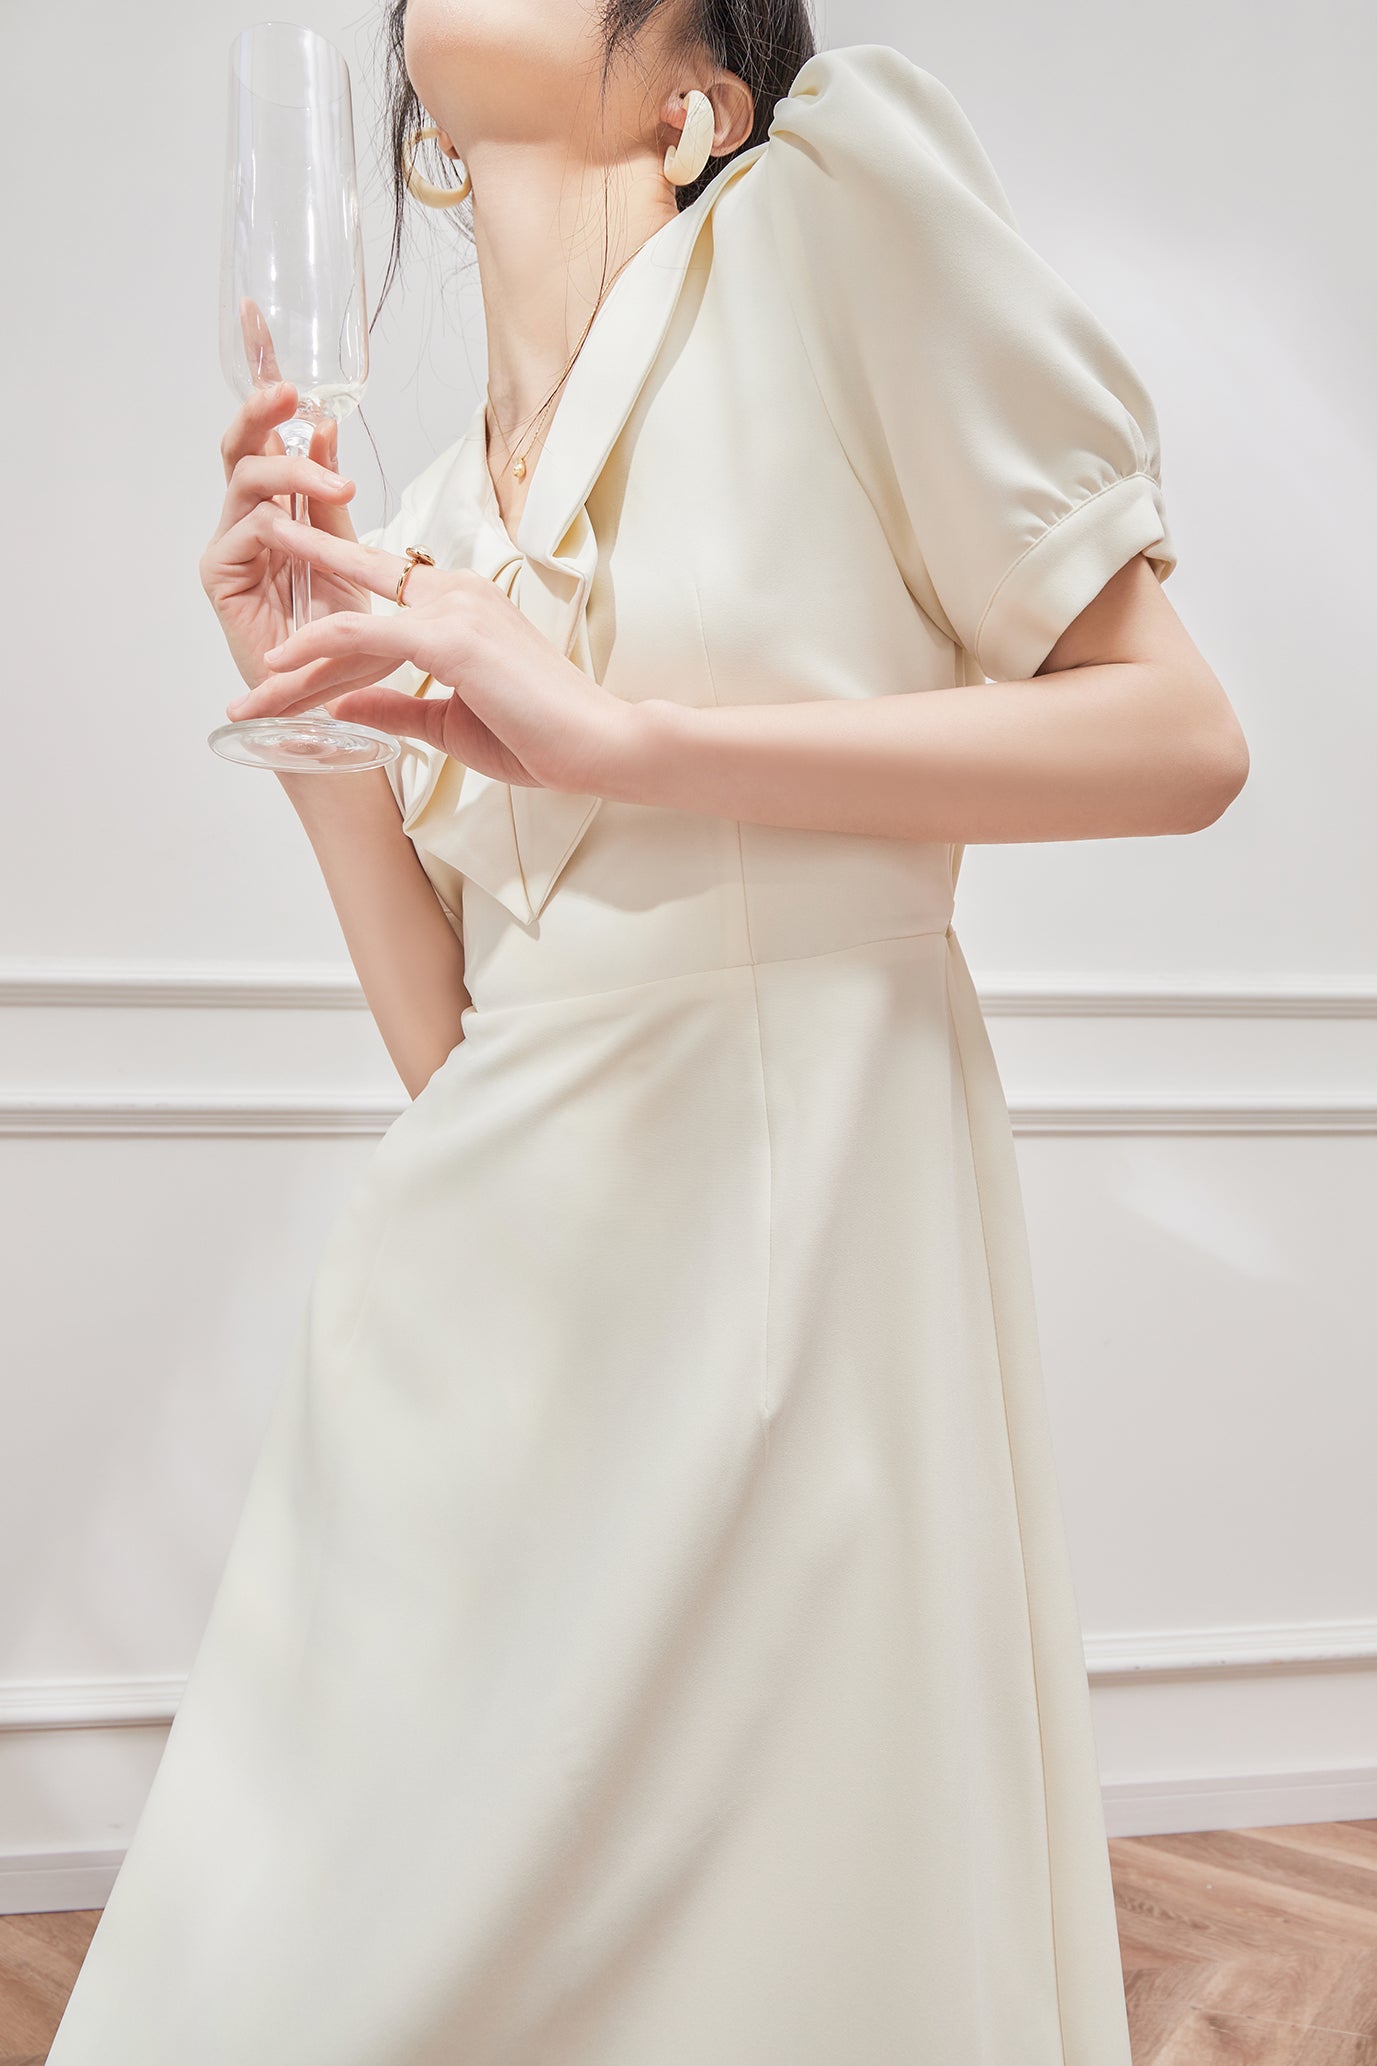 Elegant White French Summer Dress.